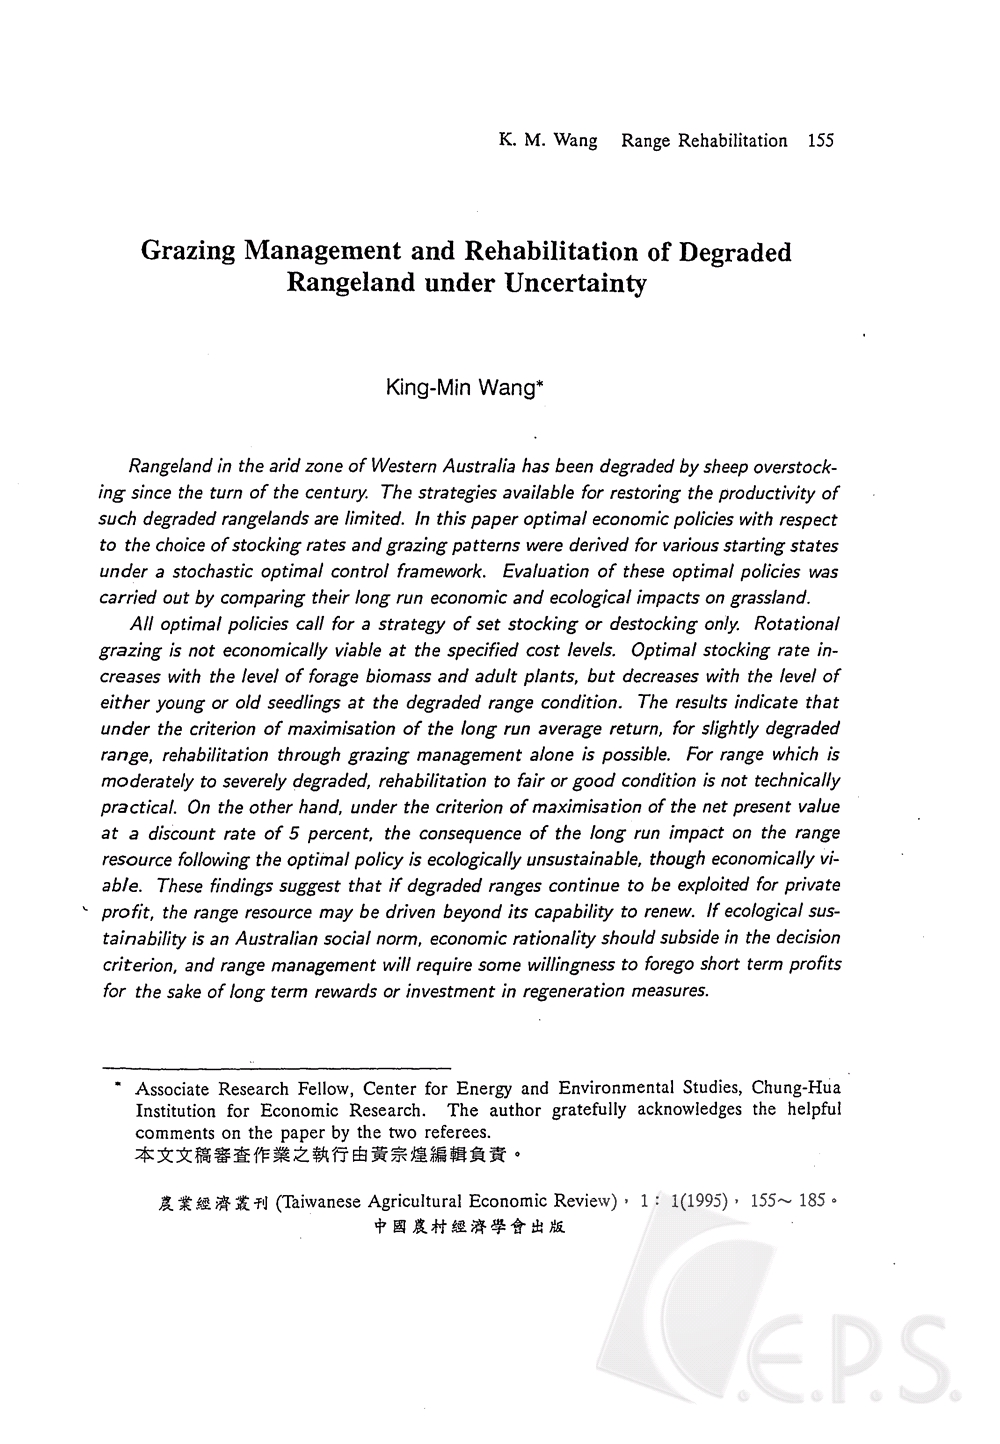 Grazing_Management_and_Rehabilitation_of_Degraded_Rangeland_under_Uncertainty.jpg